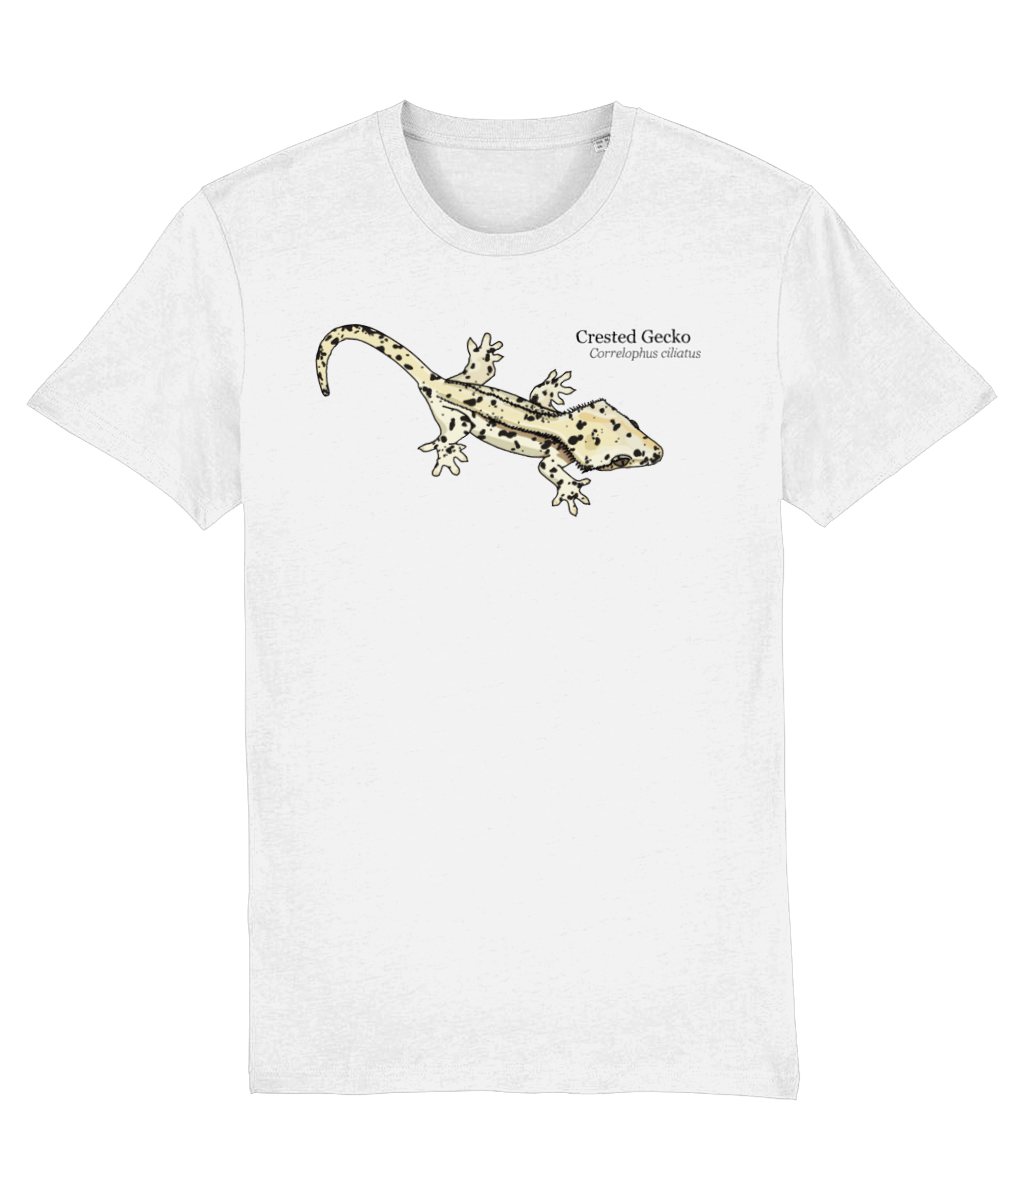 Super Dalmatian Crested Gecko Charity T-Shirt